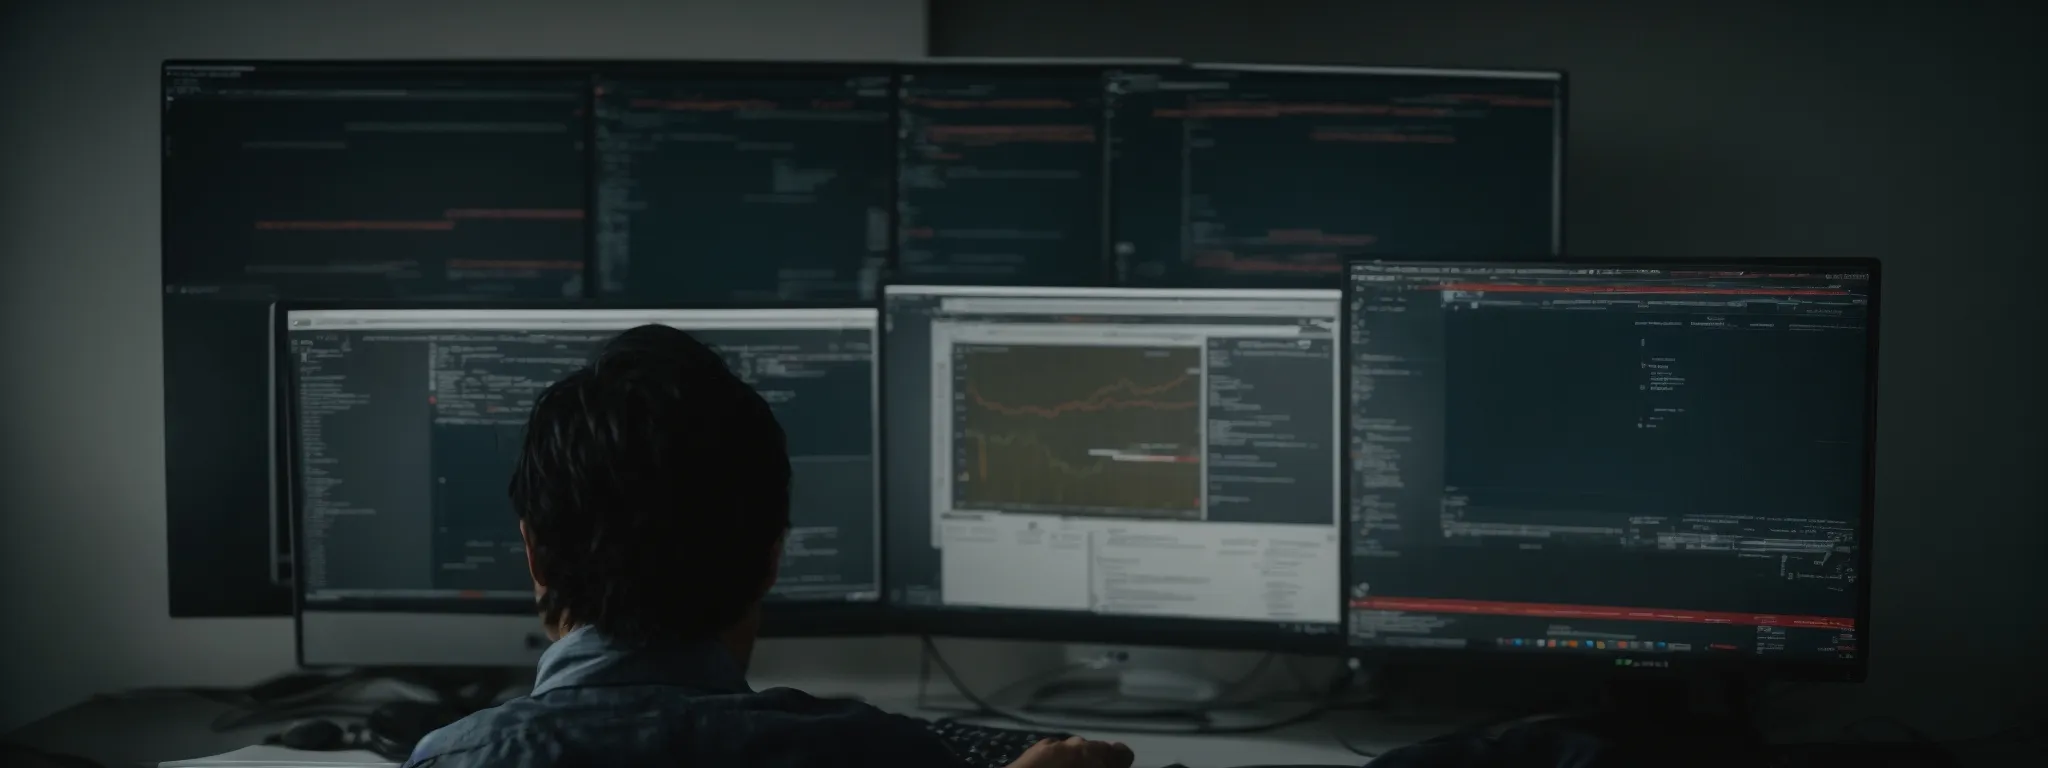 a web developer scrutinizes a computer screen displaying a search engine's web crawler tool.